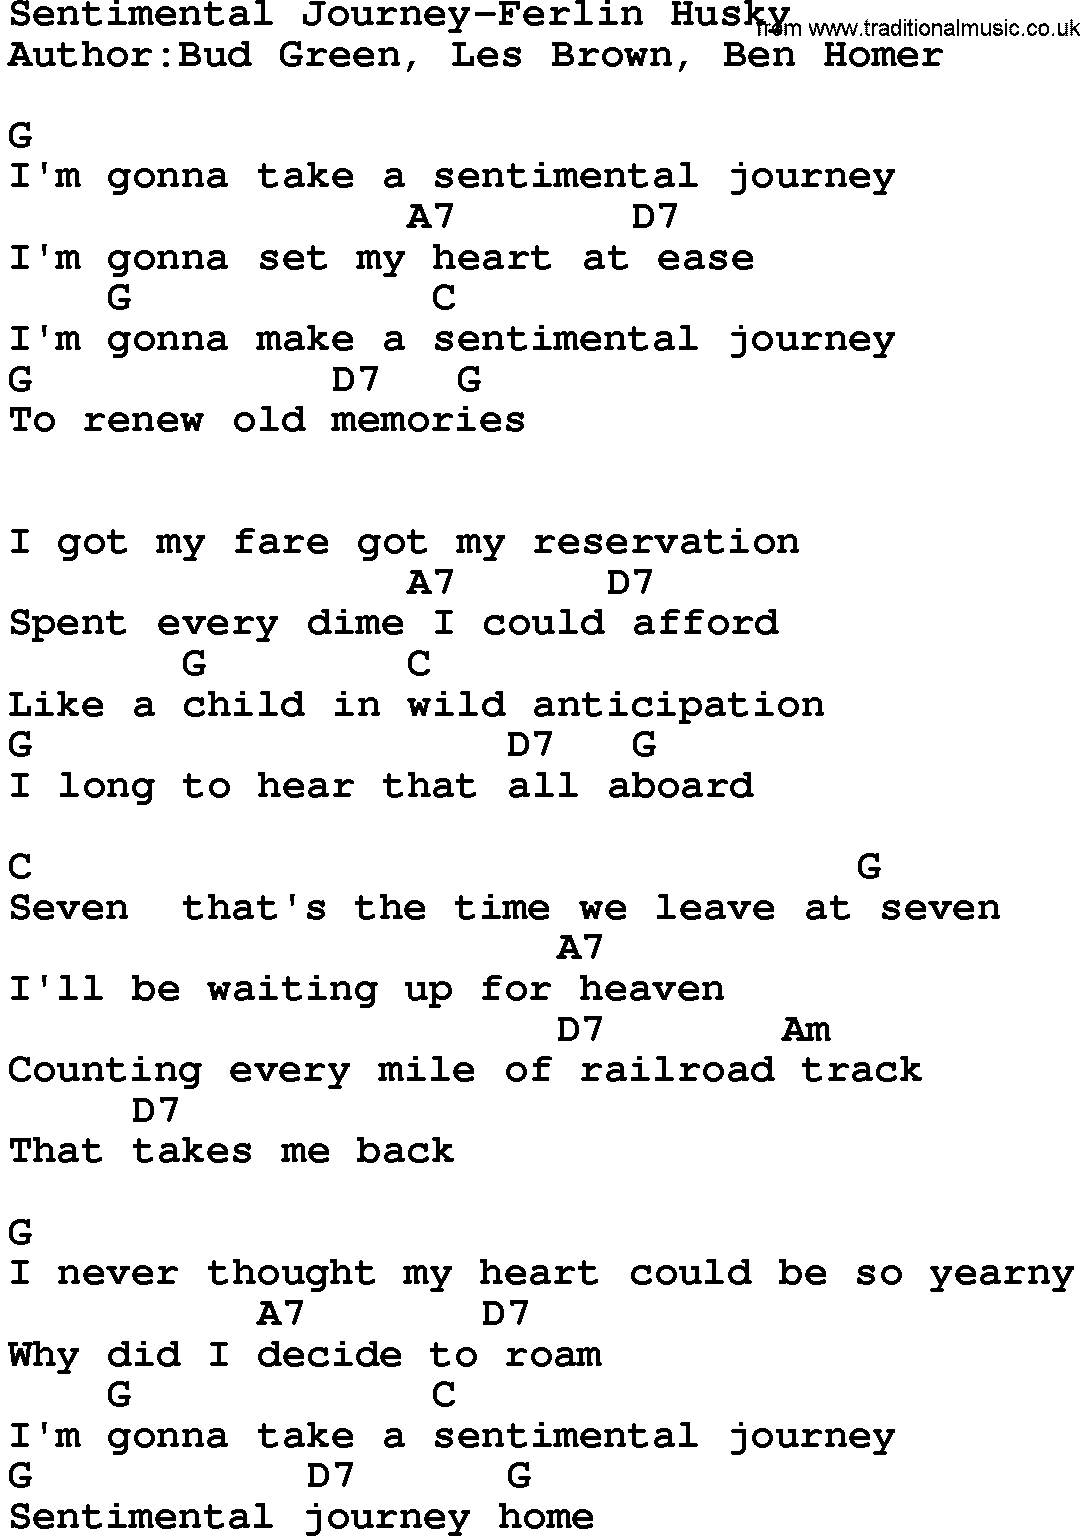 Country music song: Sentimental Journey-Ferlin Husky lyrics and chords